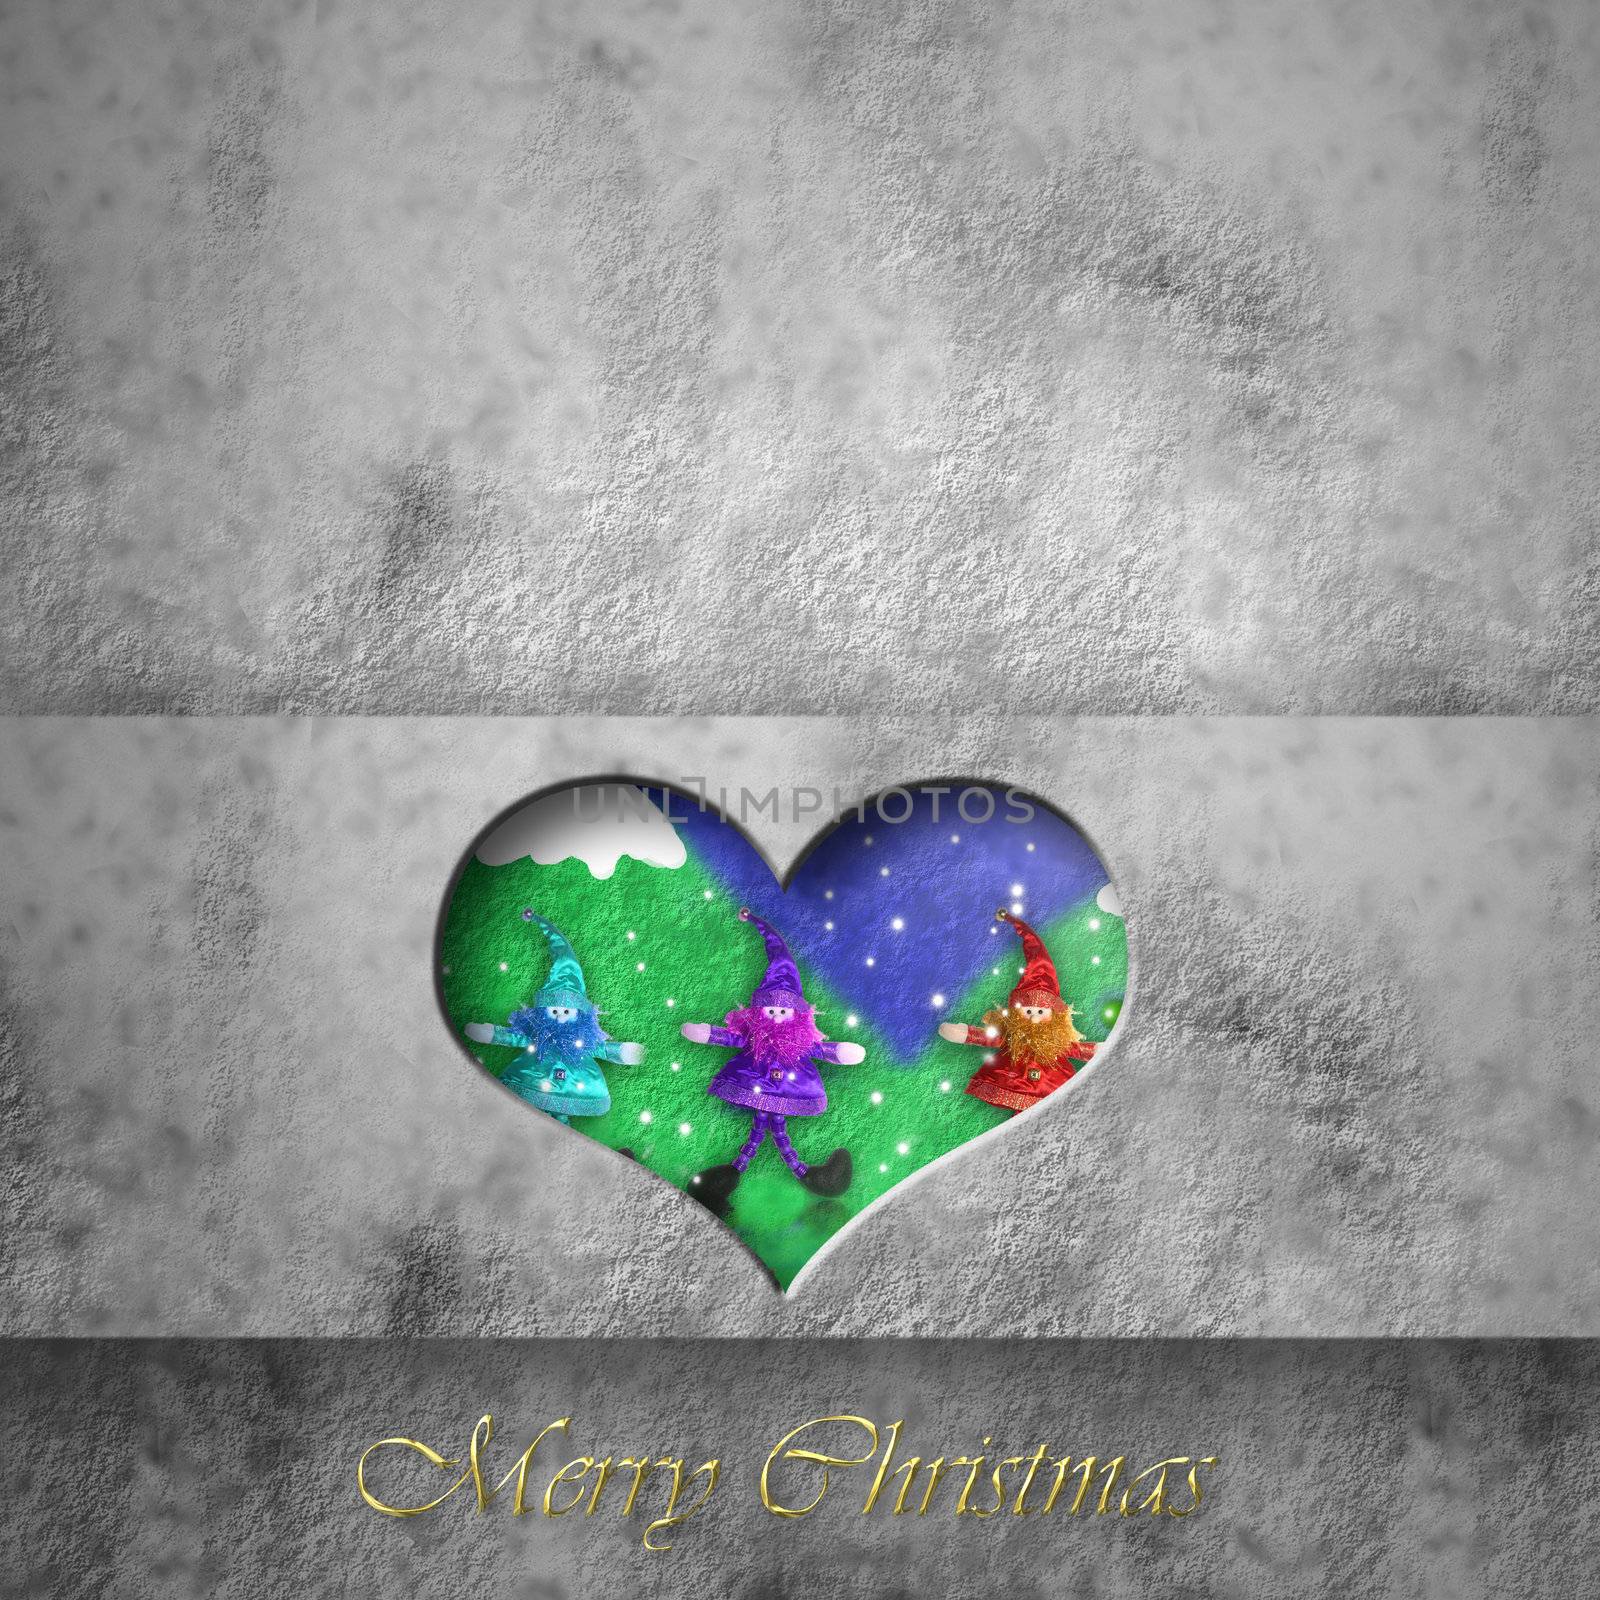 Christmas card background, santa elves by Carche